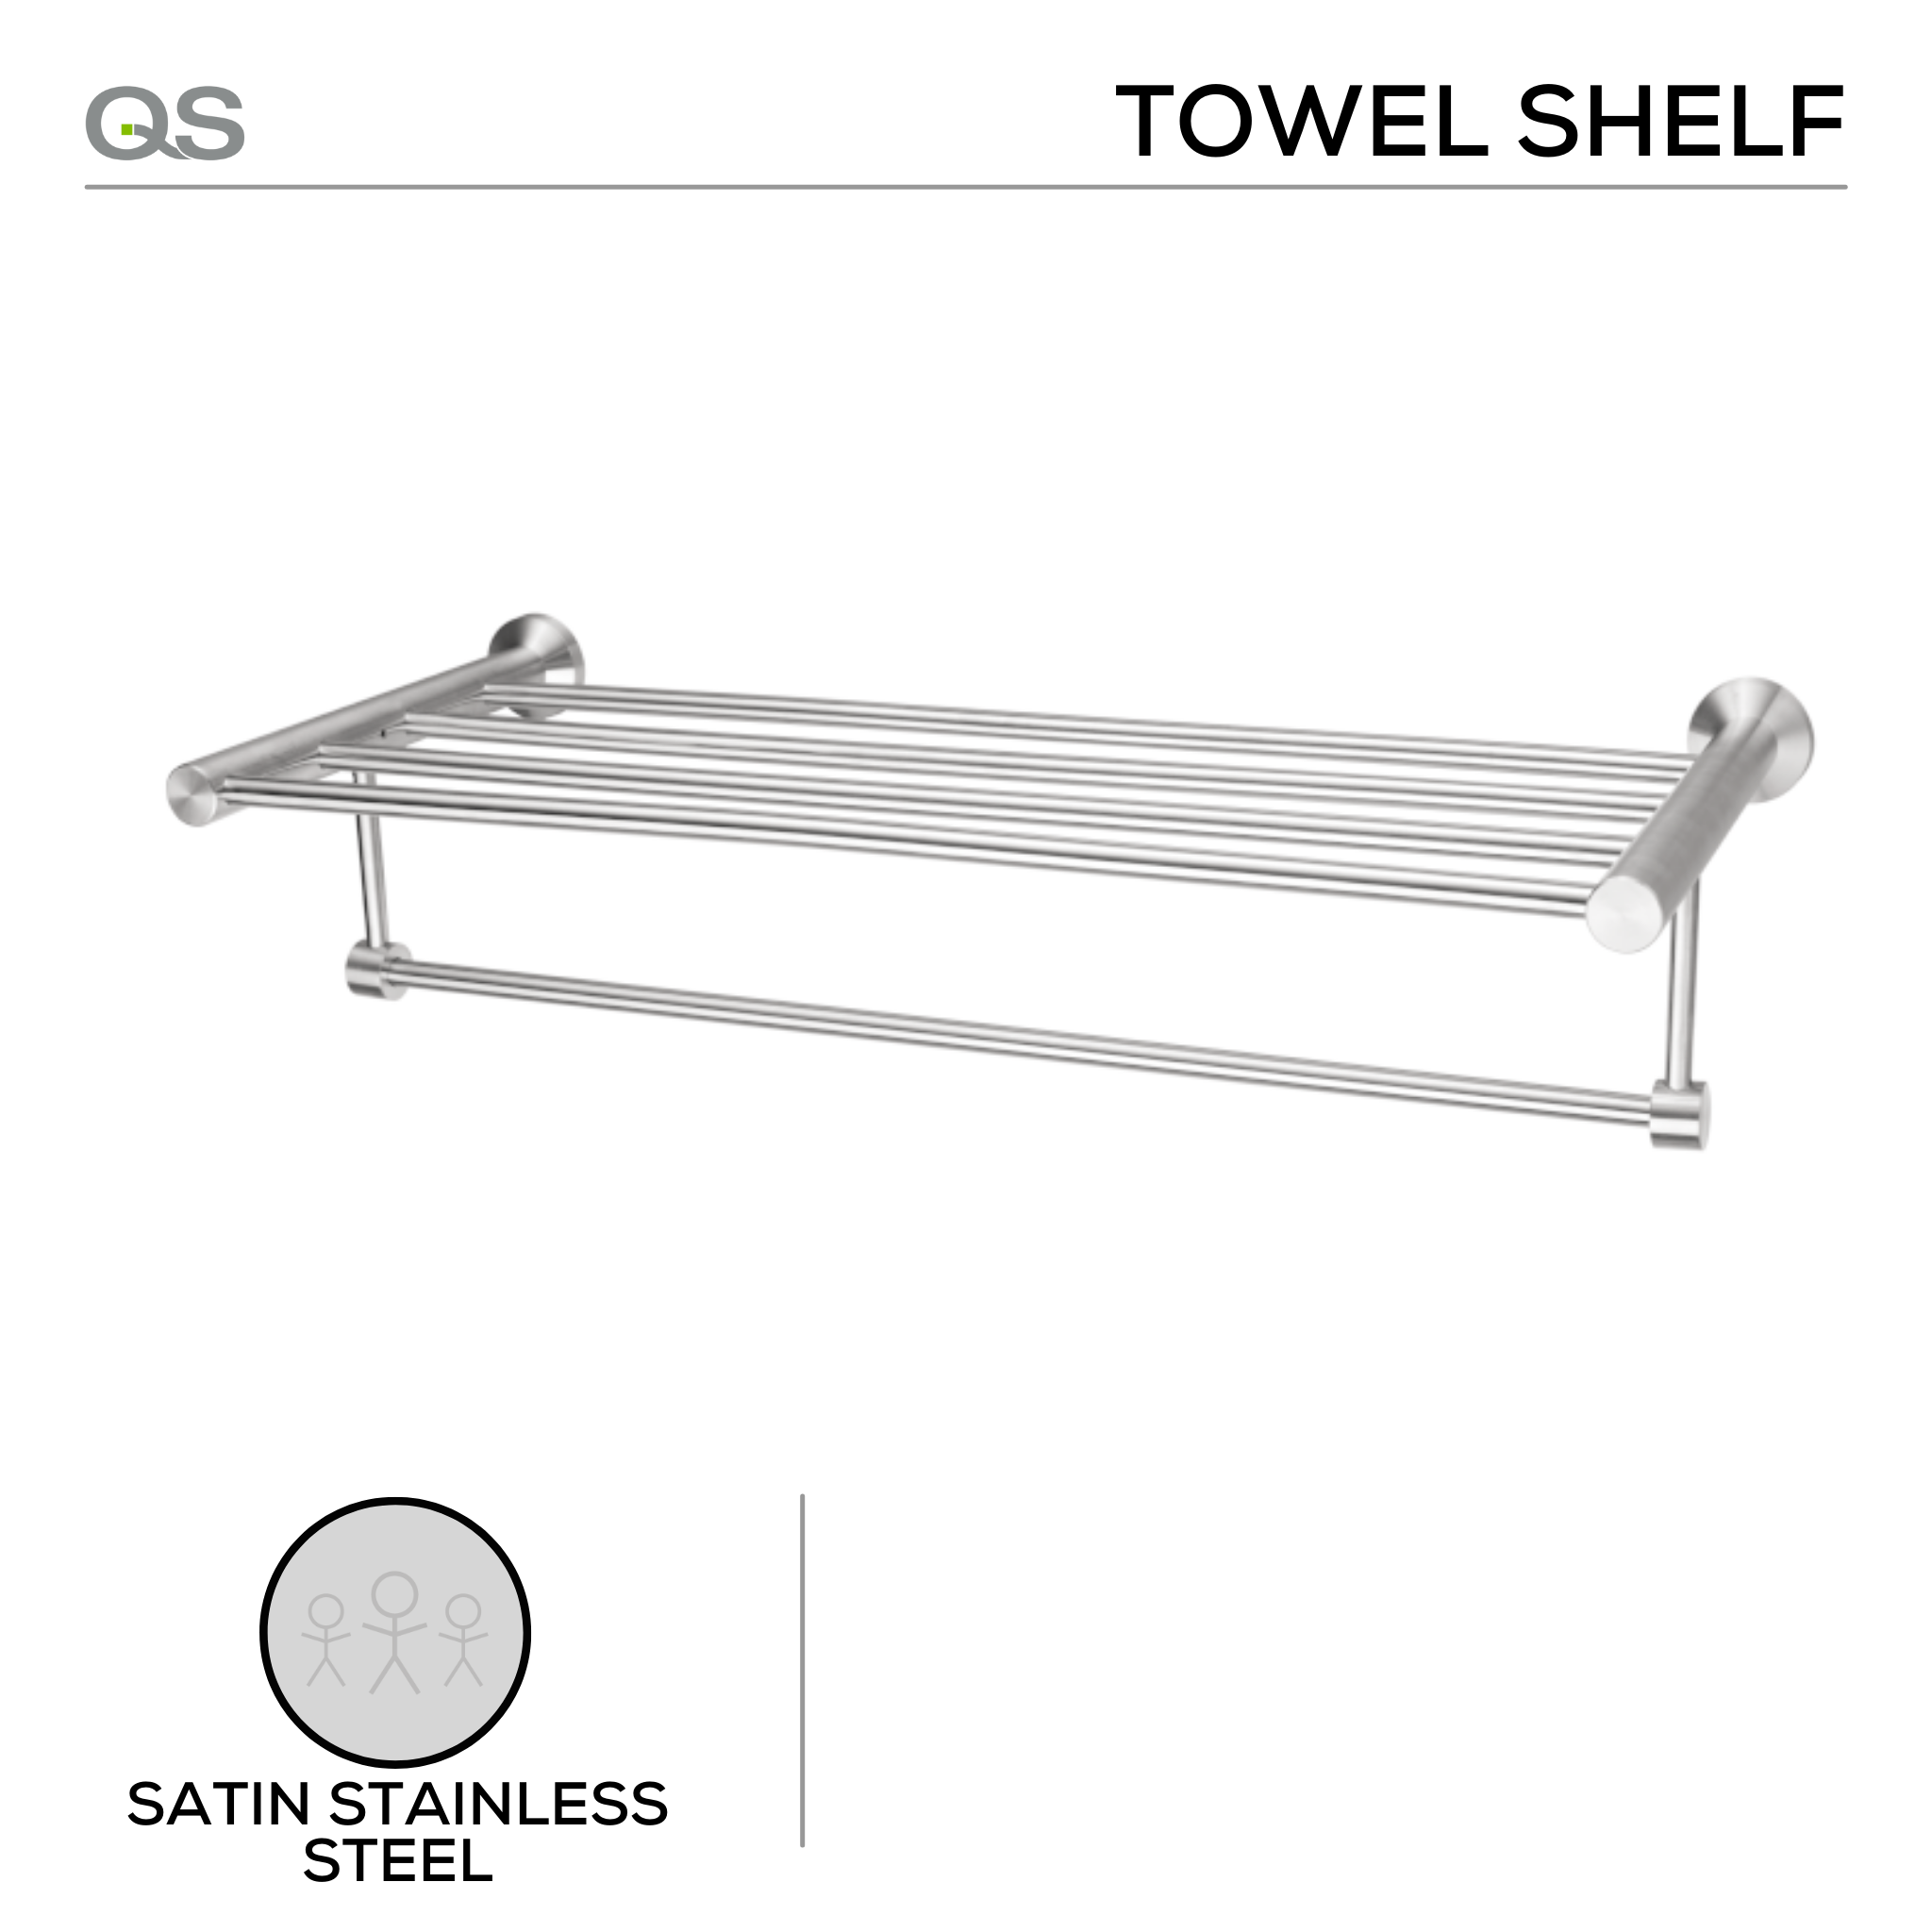 QS1504/SSS, Shelf, Towel, Satin Stainless Steel, QS